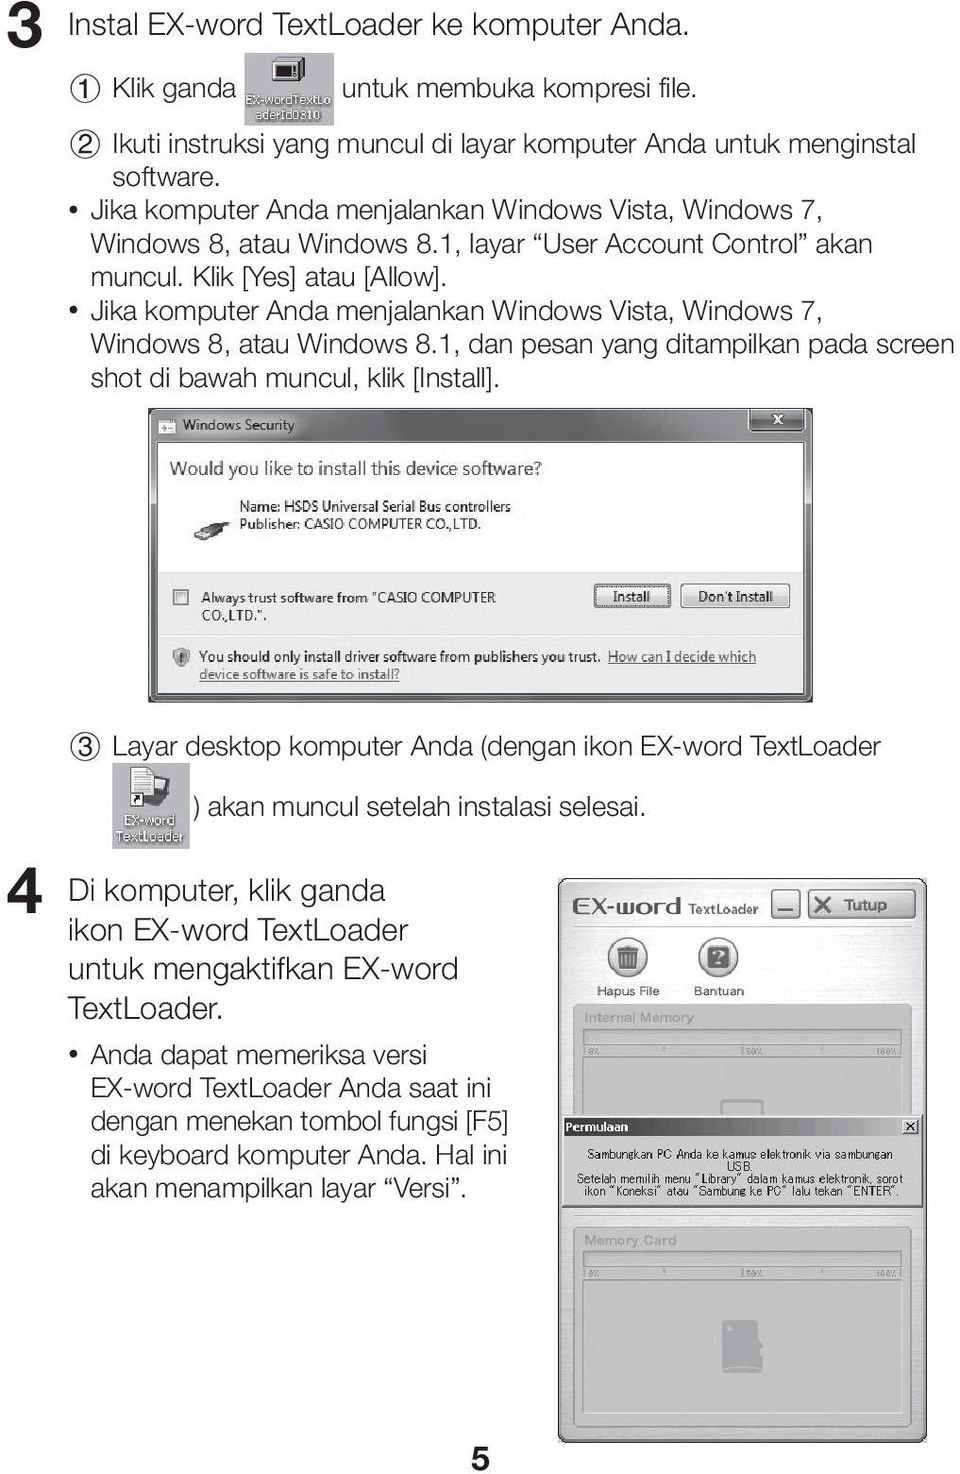 Jika komputer Anda menjalankan Windows Vista, Windows 7, Windows 8, atau Windows 8.1, dan pesan yang ditampilkan pada screen shot di bawah muncul, klik [Install].